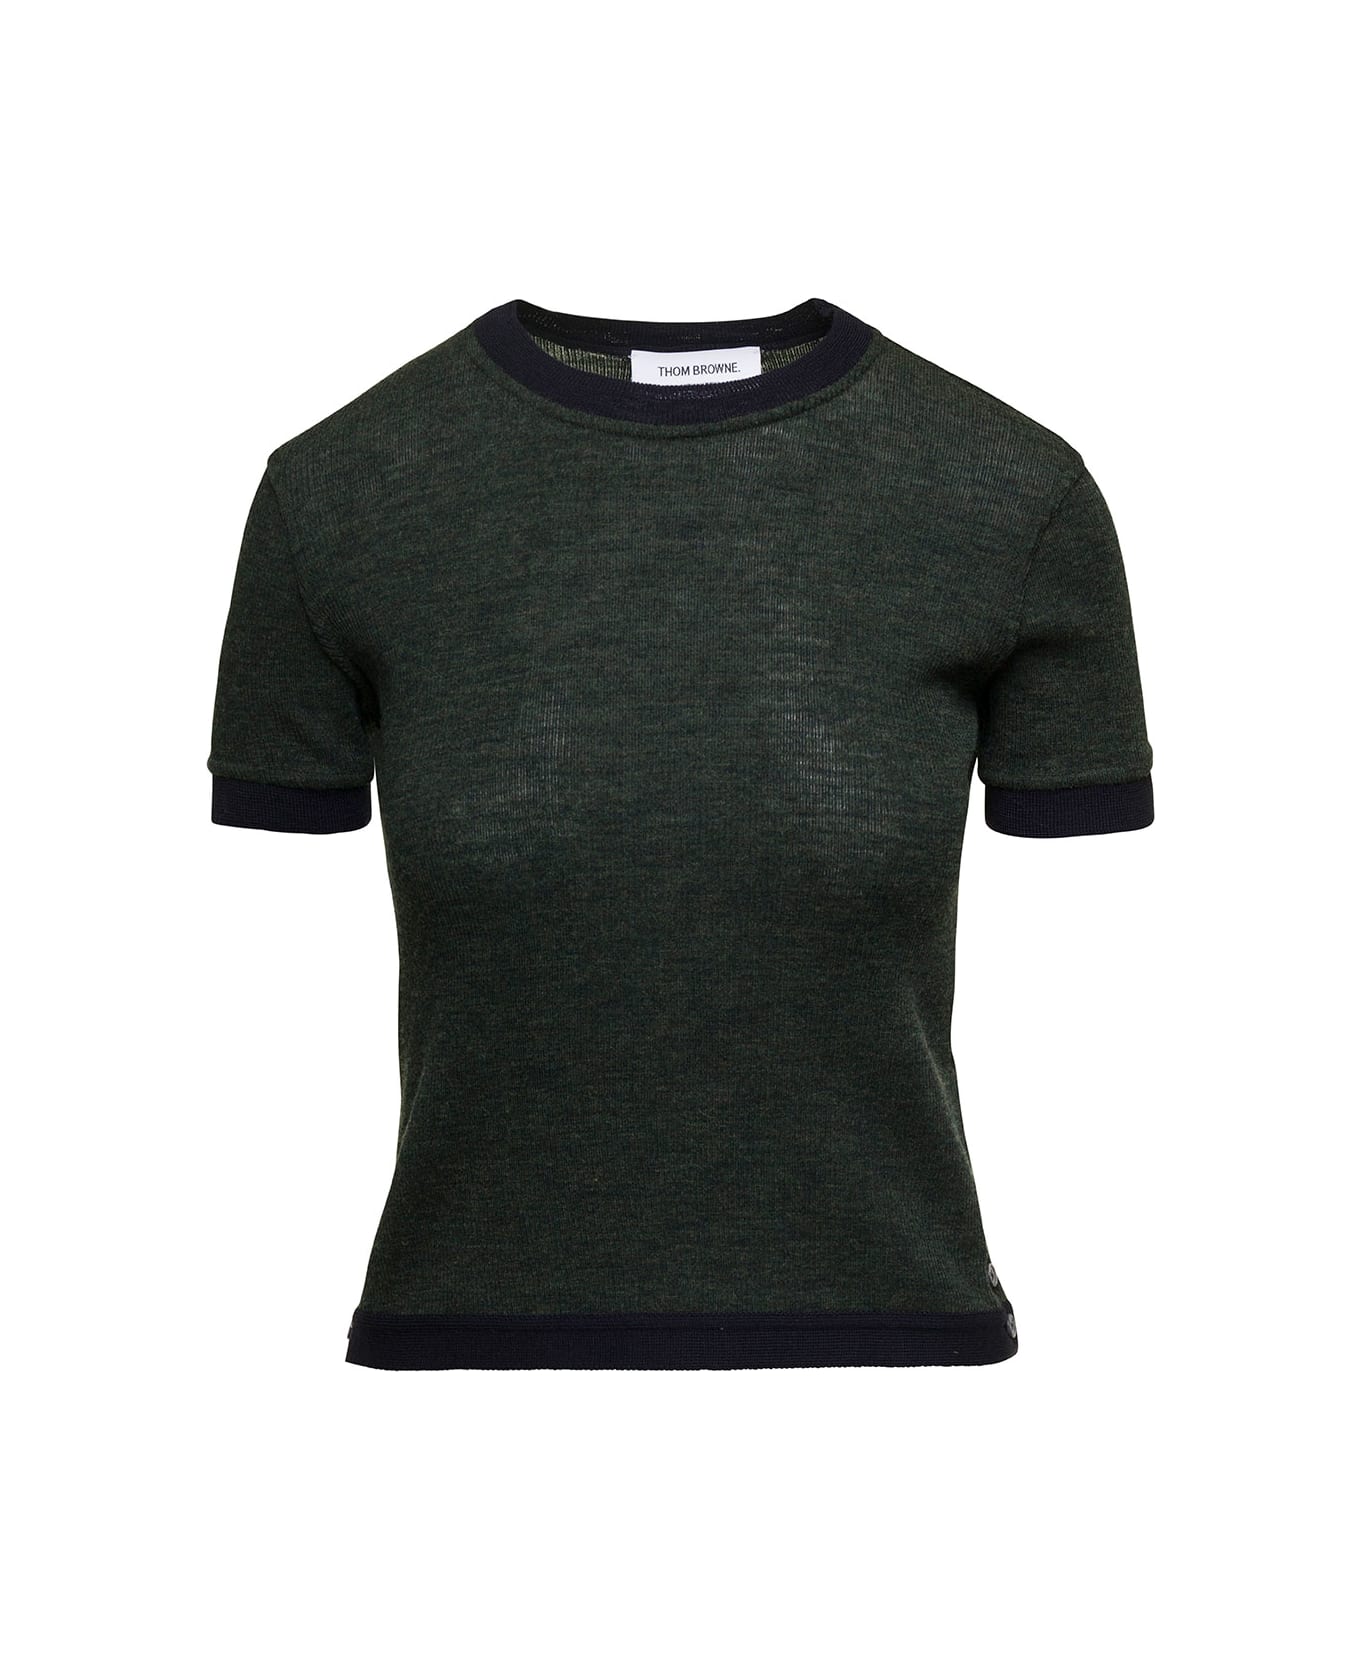 Thom Browne Short Sleeve Tee W/ Contrast Trims In Wool Rib - Green